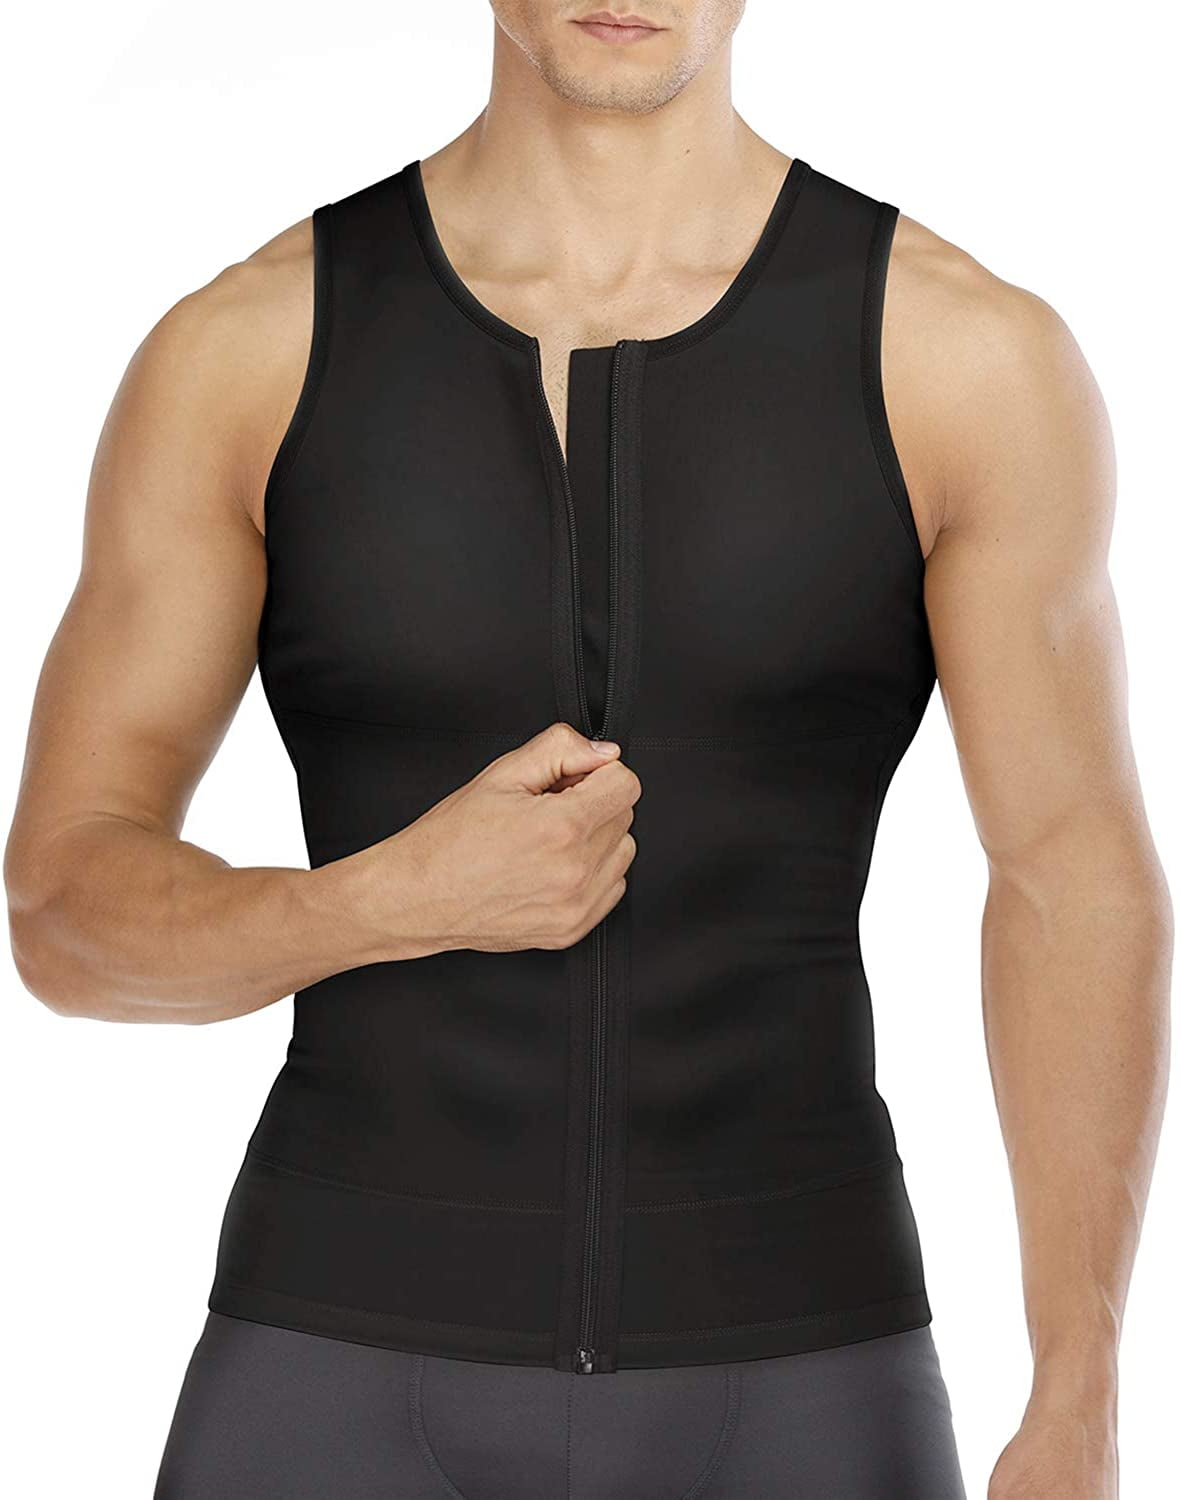 UK Compression Training Sports Gym Vest for Men Belly Buster Underwear Girdle 